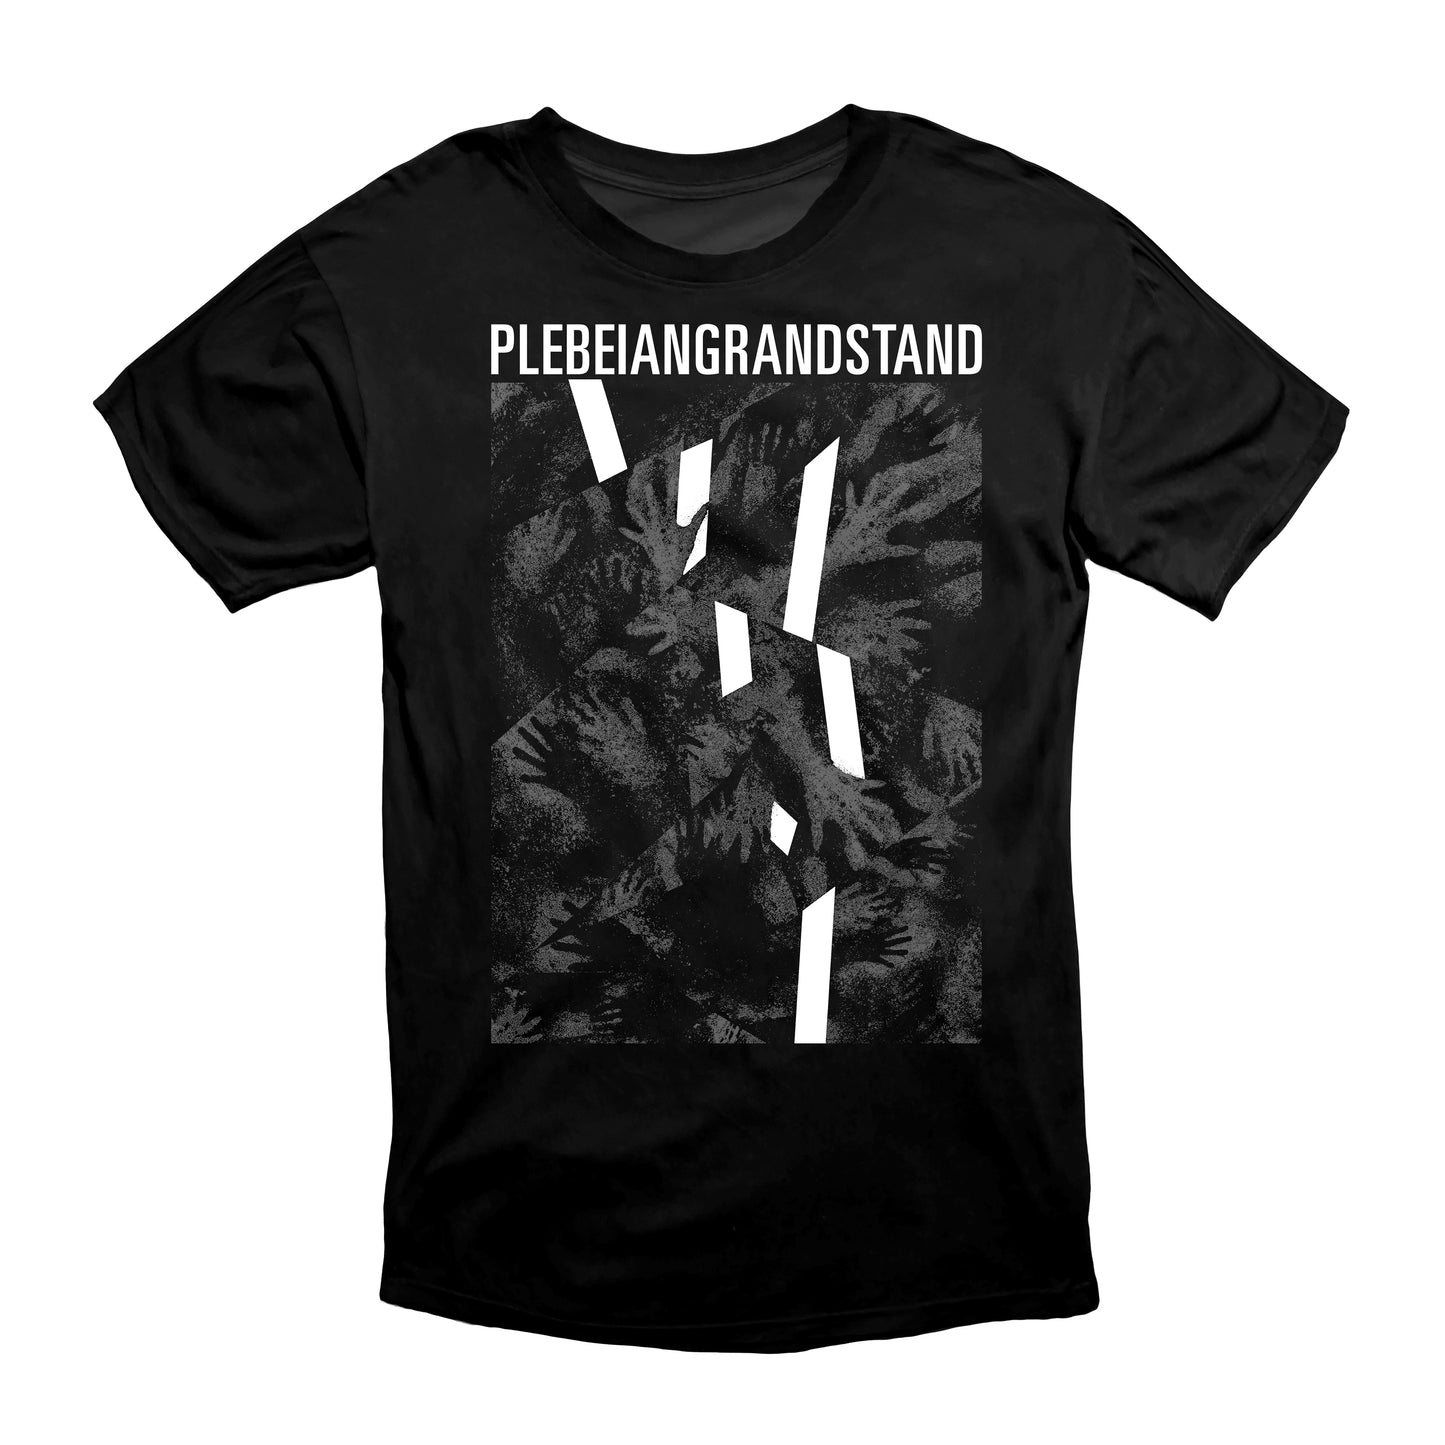 PLEBEIAN GRANDSTAND "RIEN NE SUFFIT" Black T-Shirt